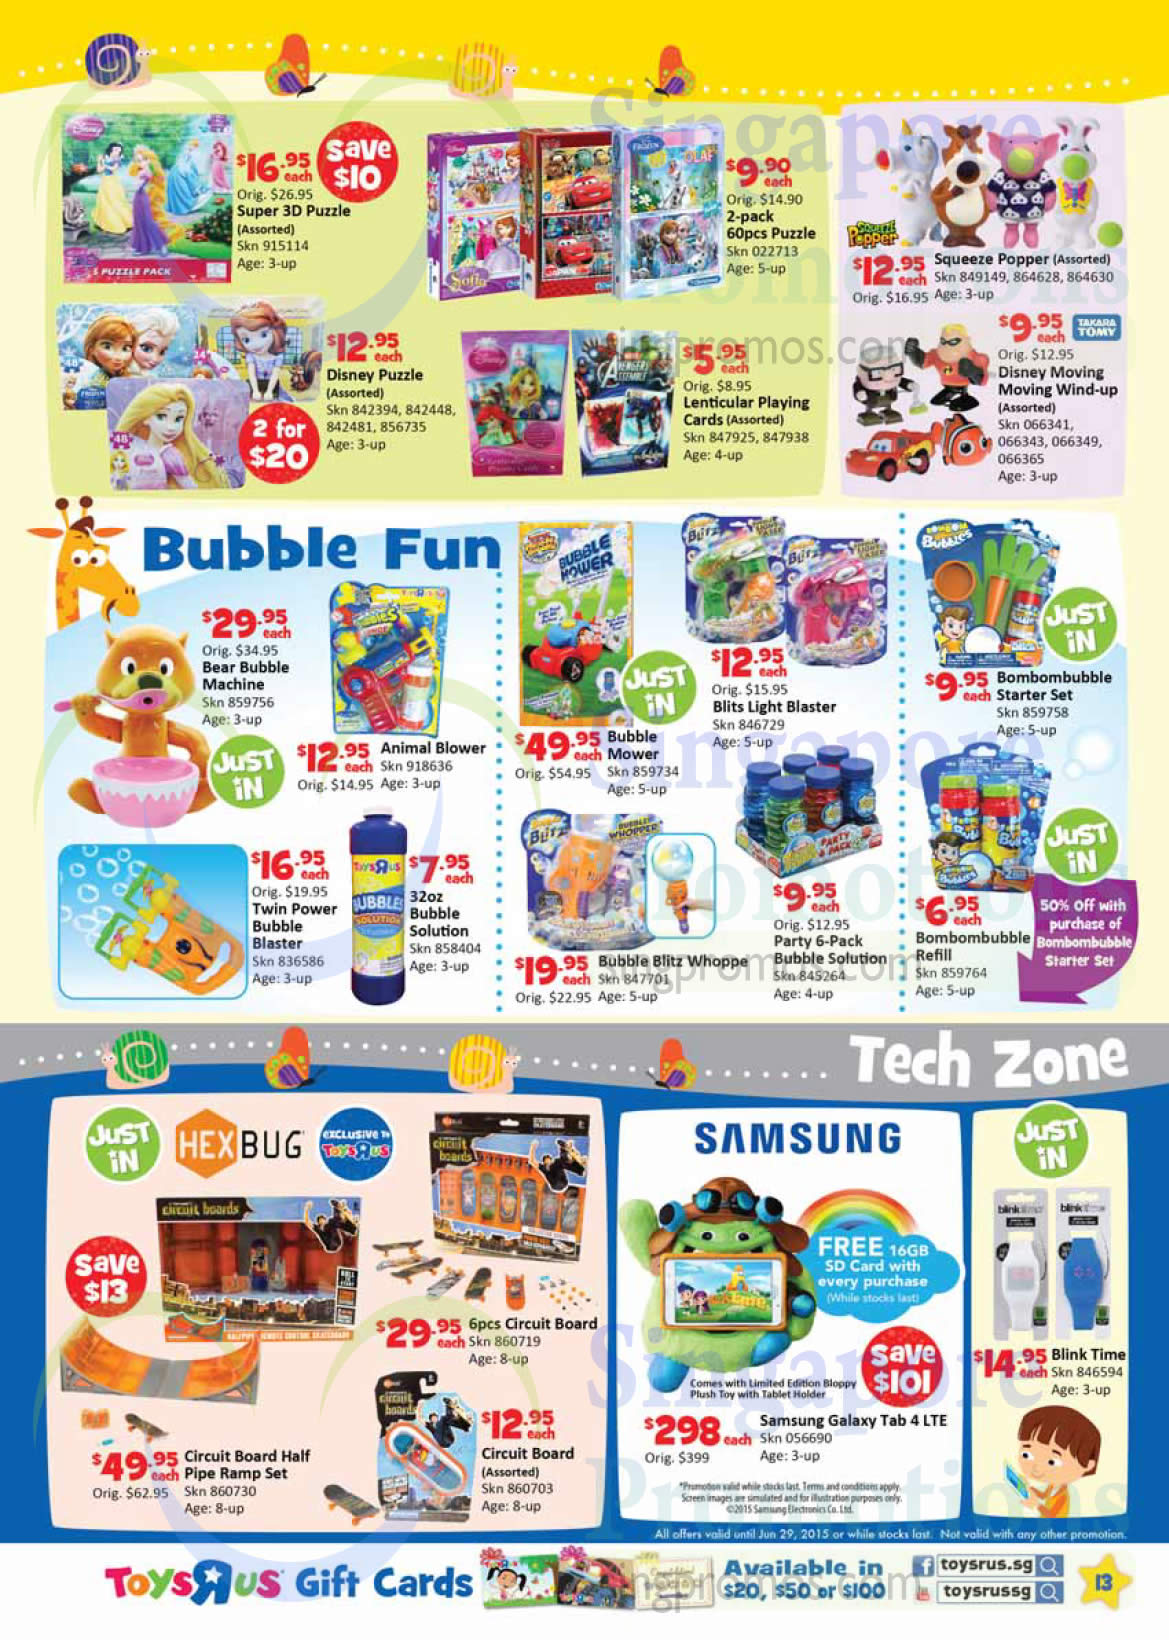 Bubble Fun, Tech Zone, Electronic Toys, Hex Bug, Samsung Galaxy Tab 4 ...